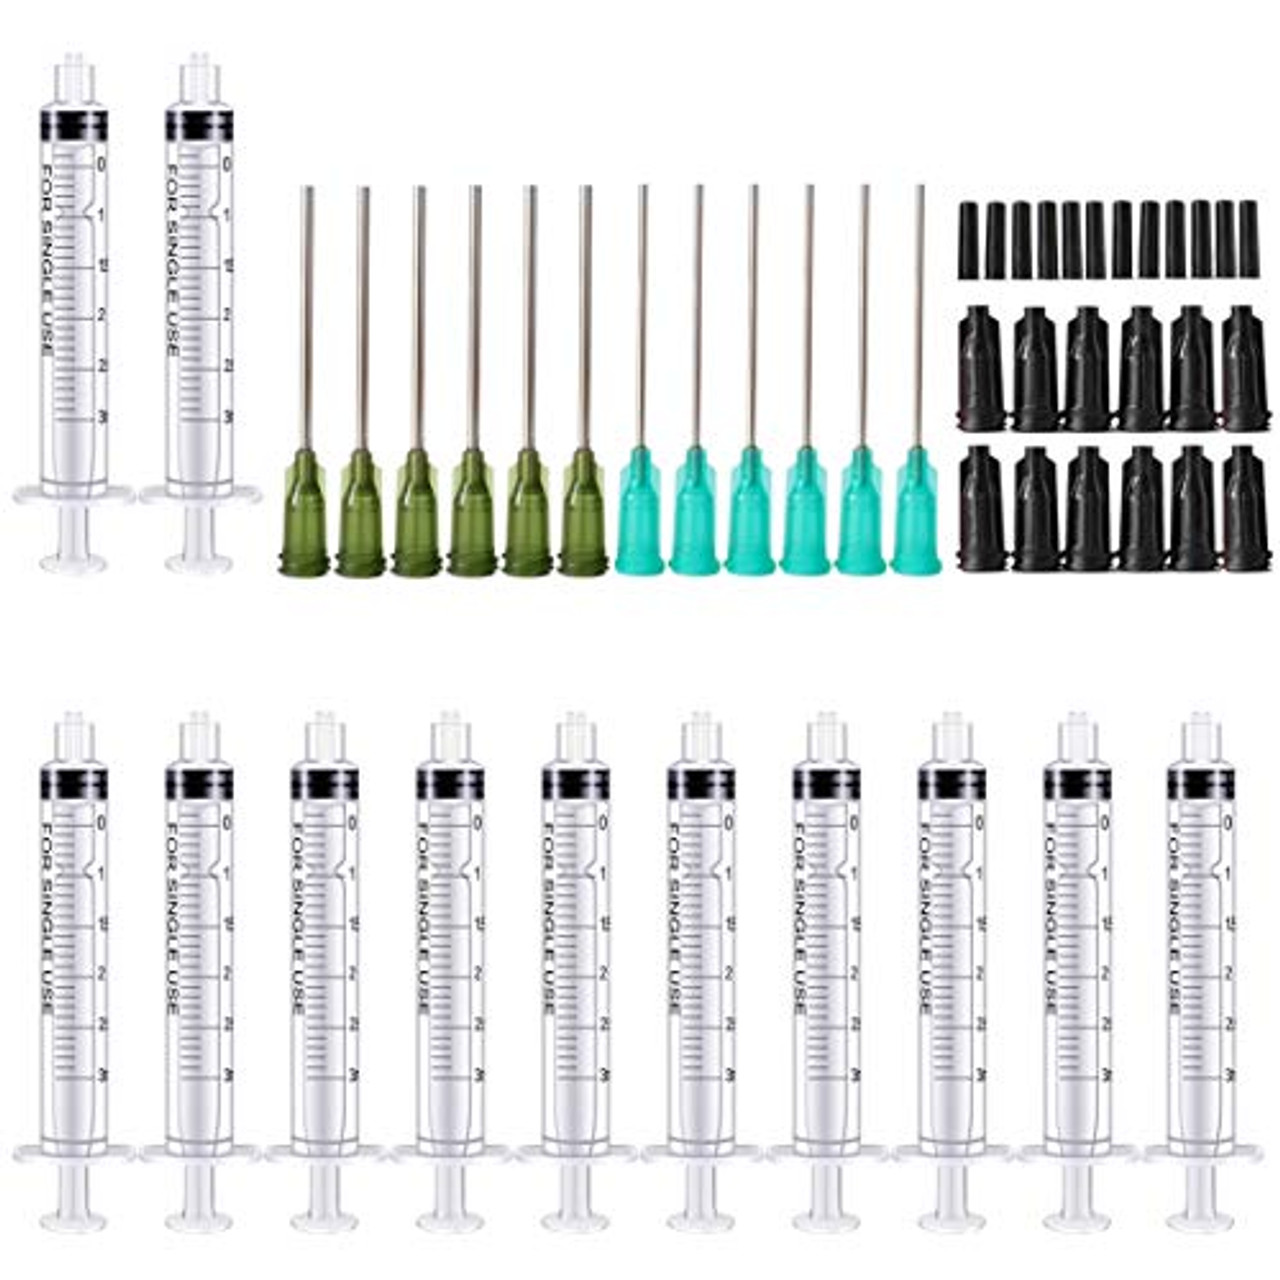 BSTEAN 5 Pack 20ml Syringe + 1ml Syringe with Needles